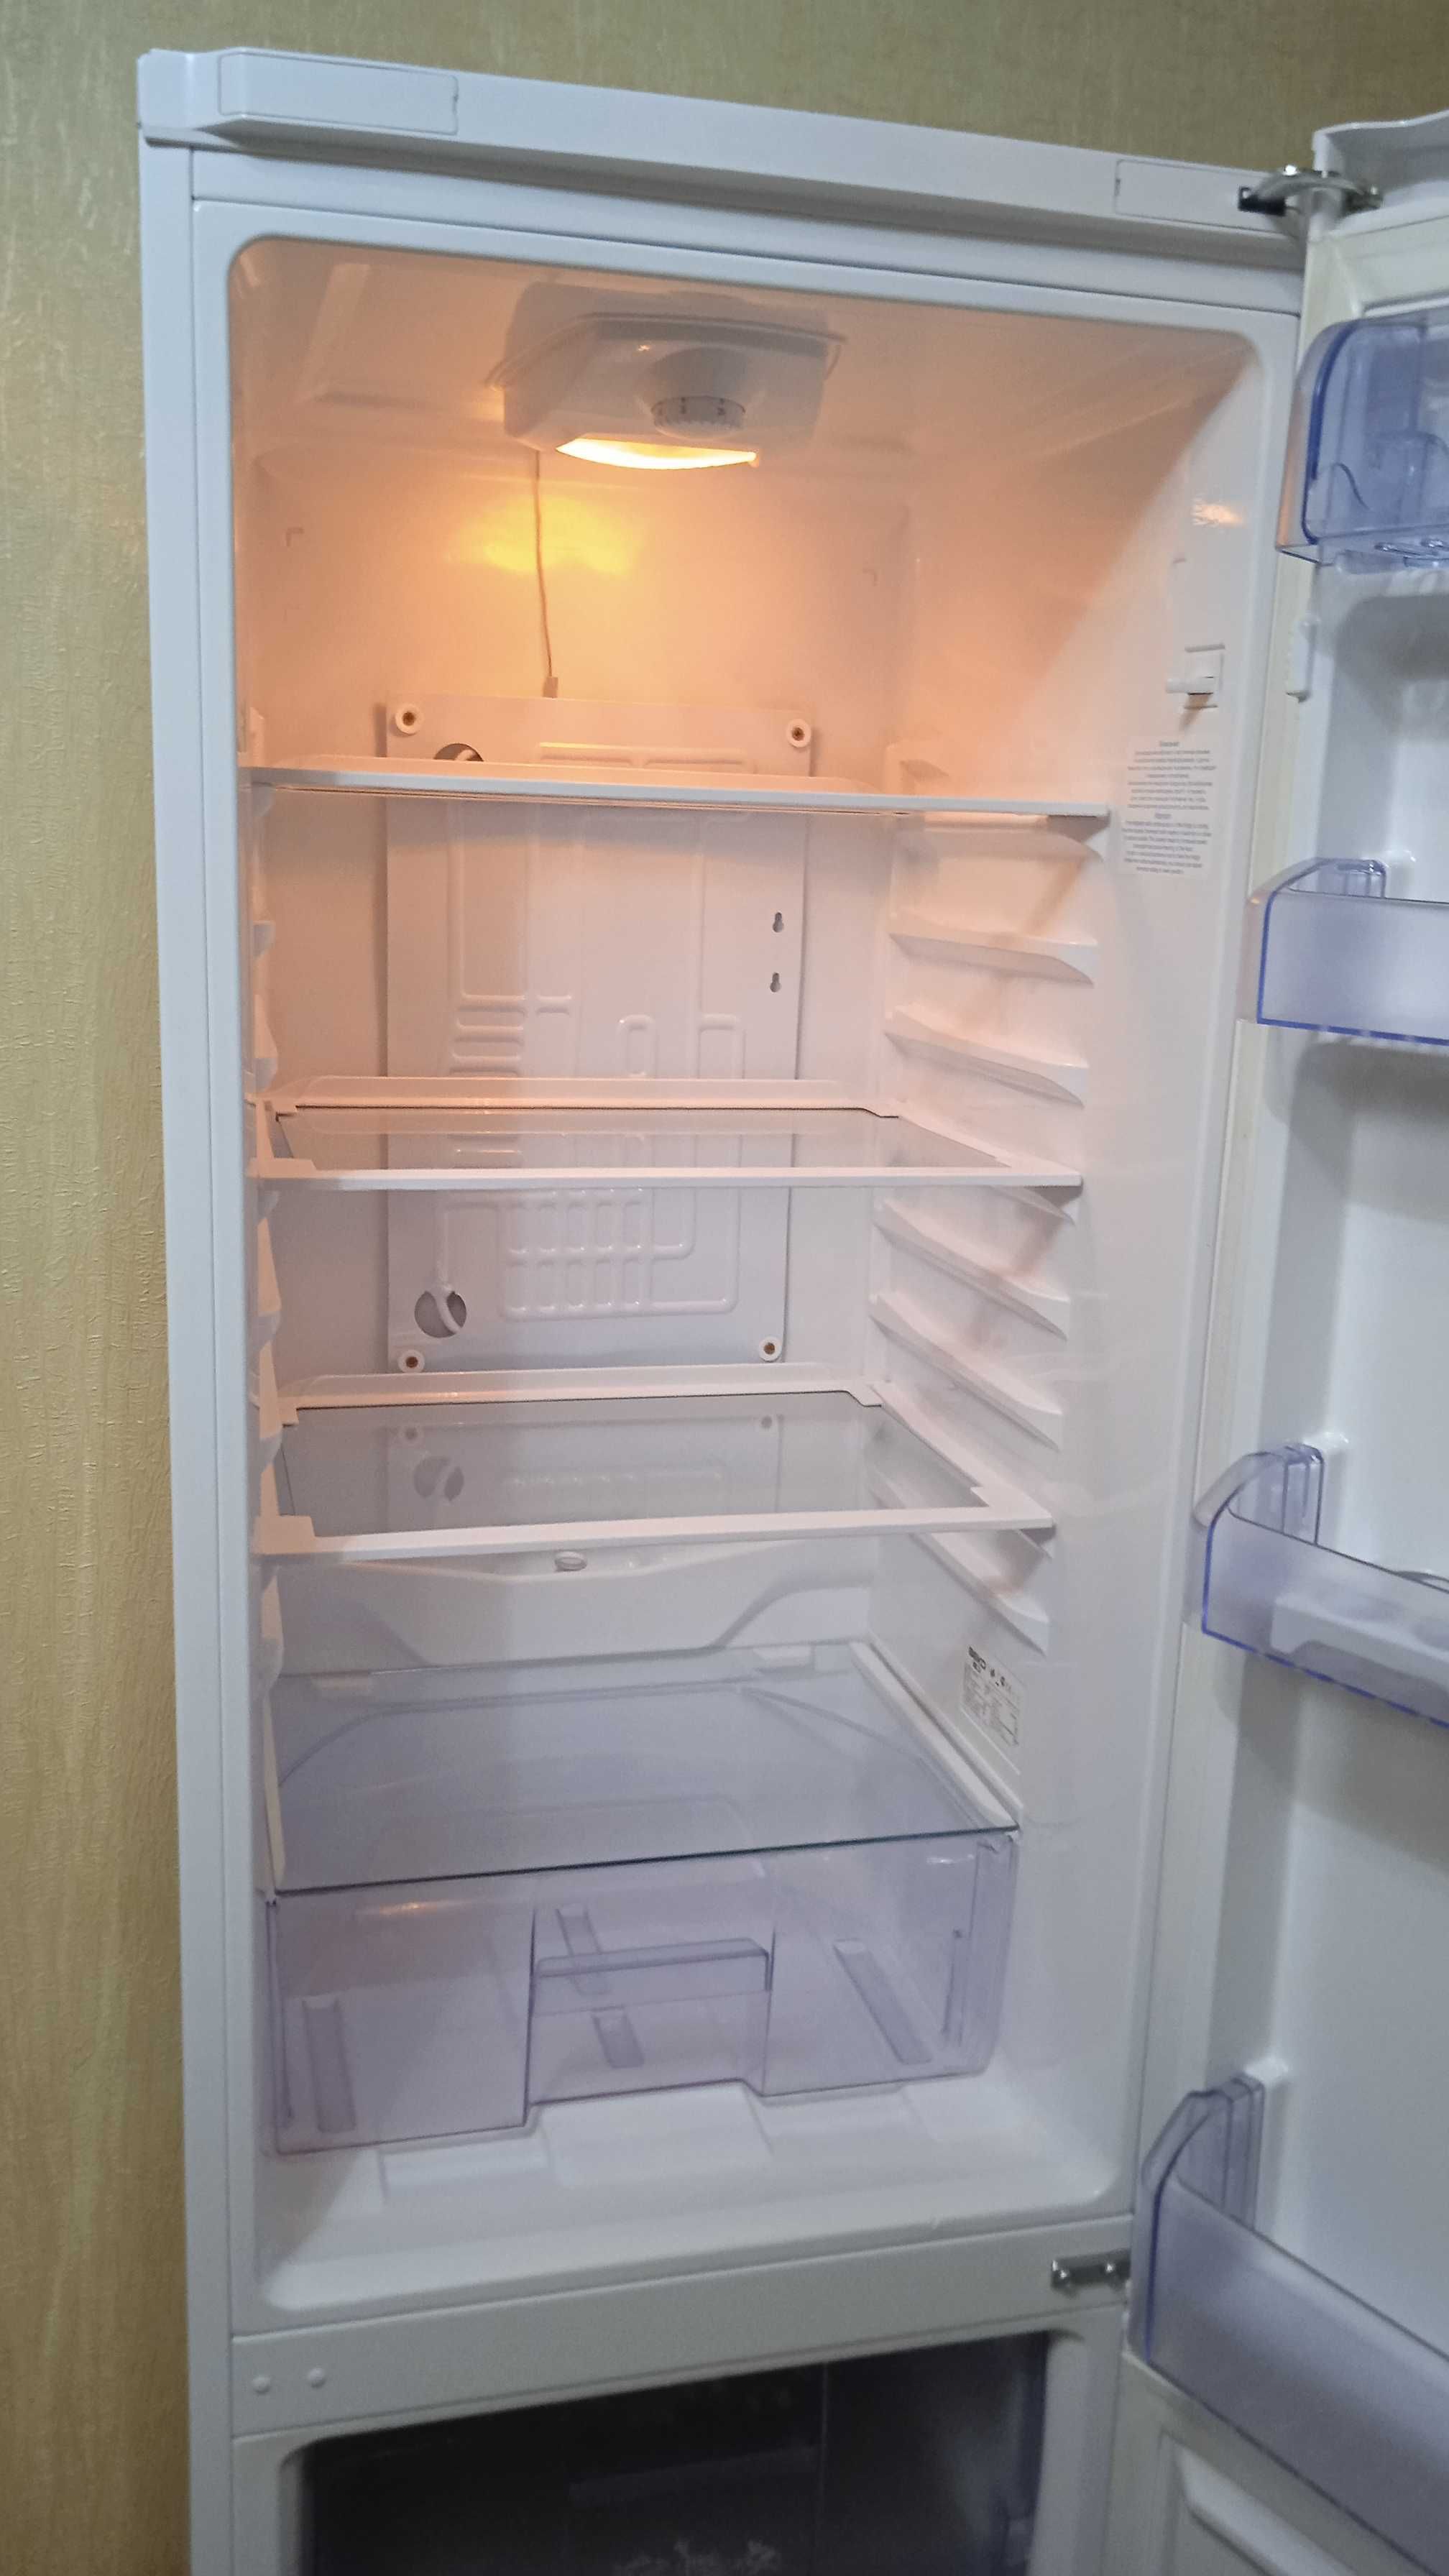 Продам холодильник БЭКО